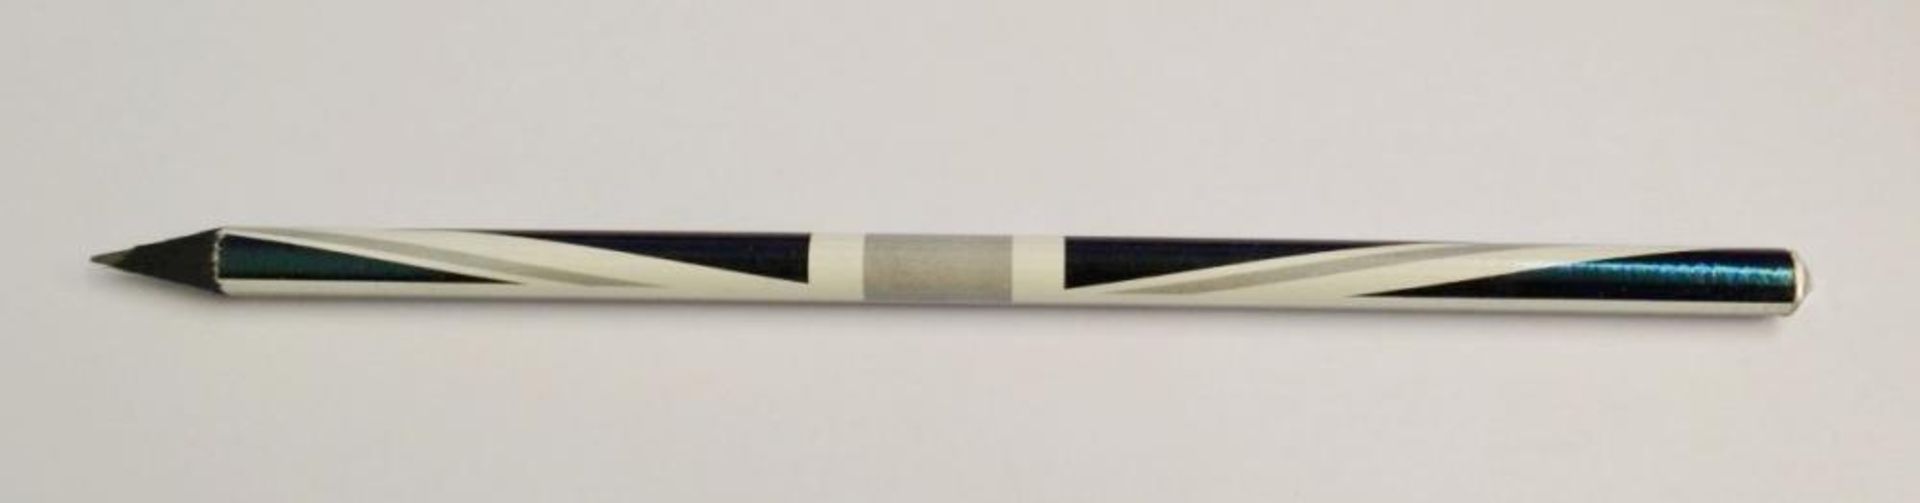 140 x ICE London "Union Jack" Pencils - Made With SWAROVSKI® ELEMENTS - Colour: Black - New / Sealed - Image 2 of 4